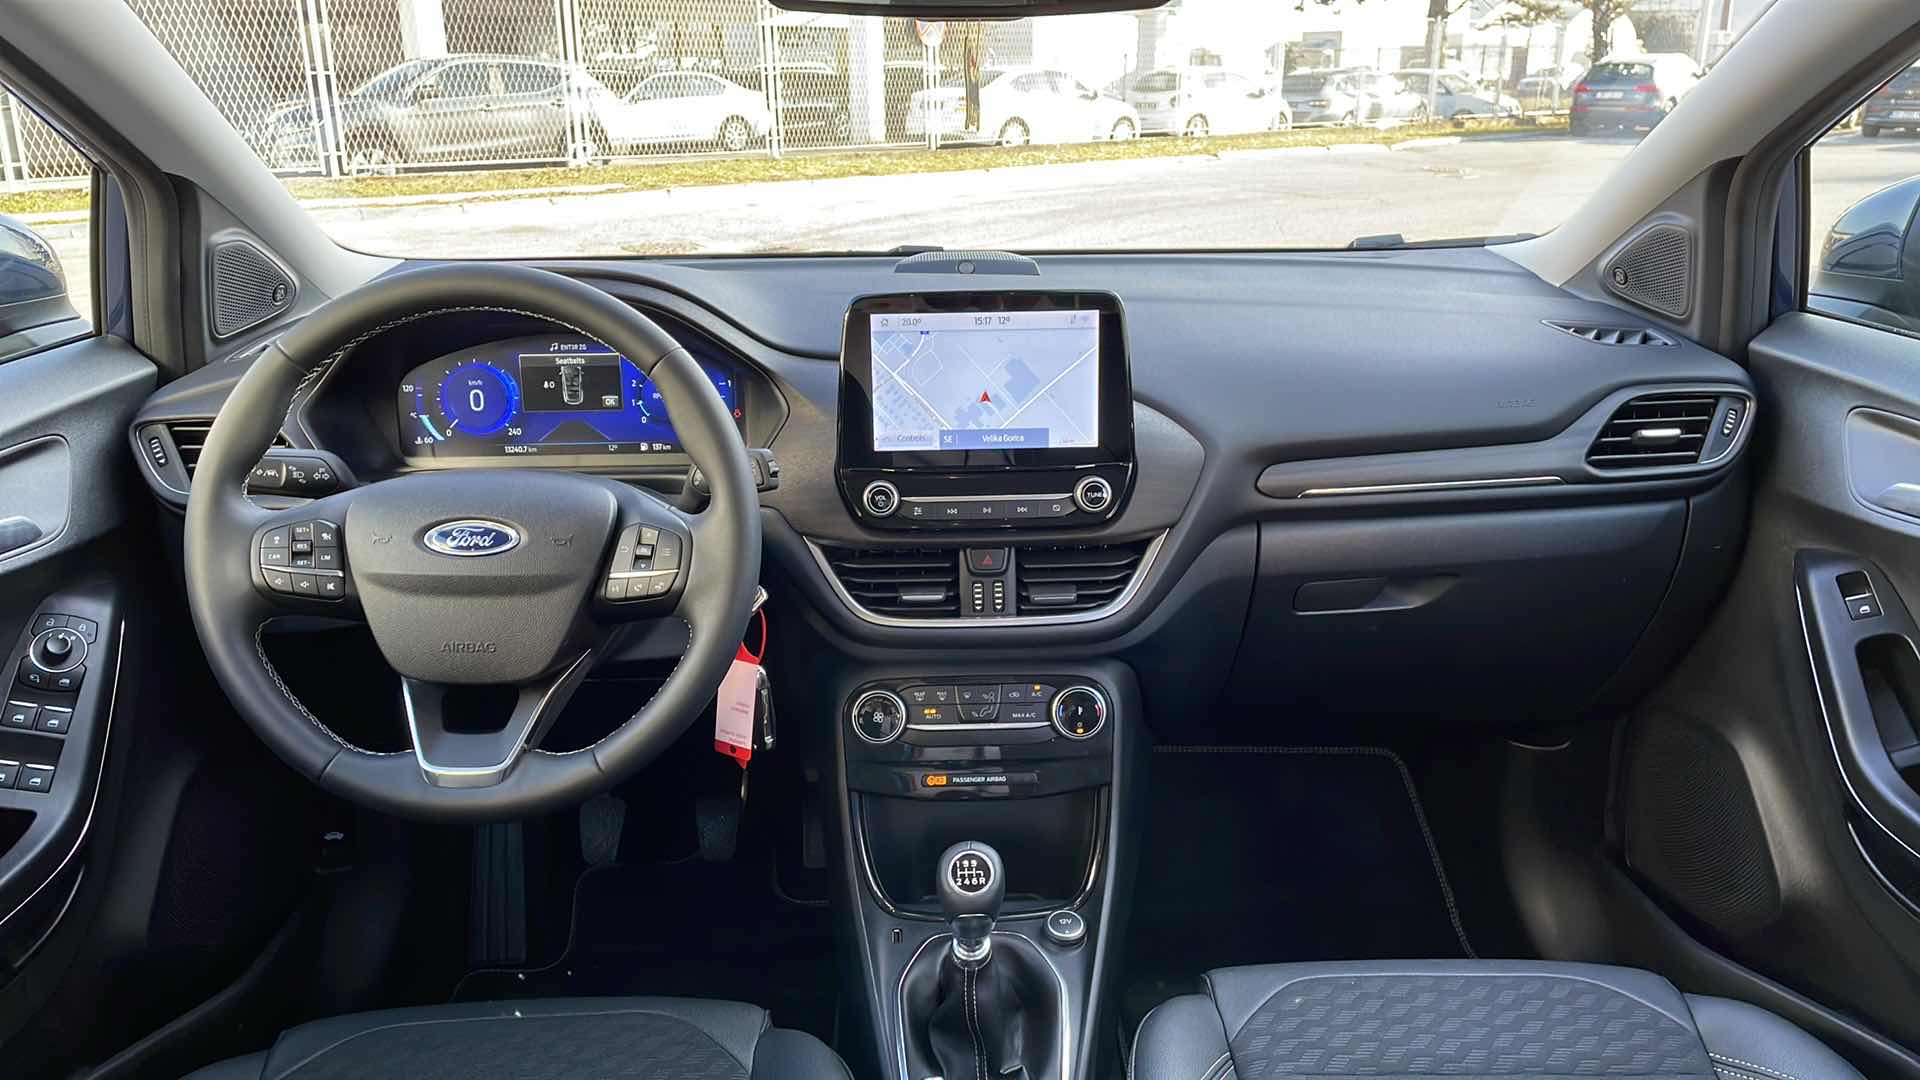 Ford Puma interior - Cockpit